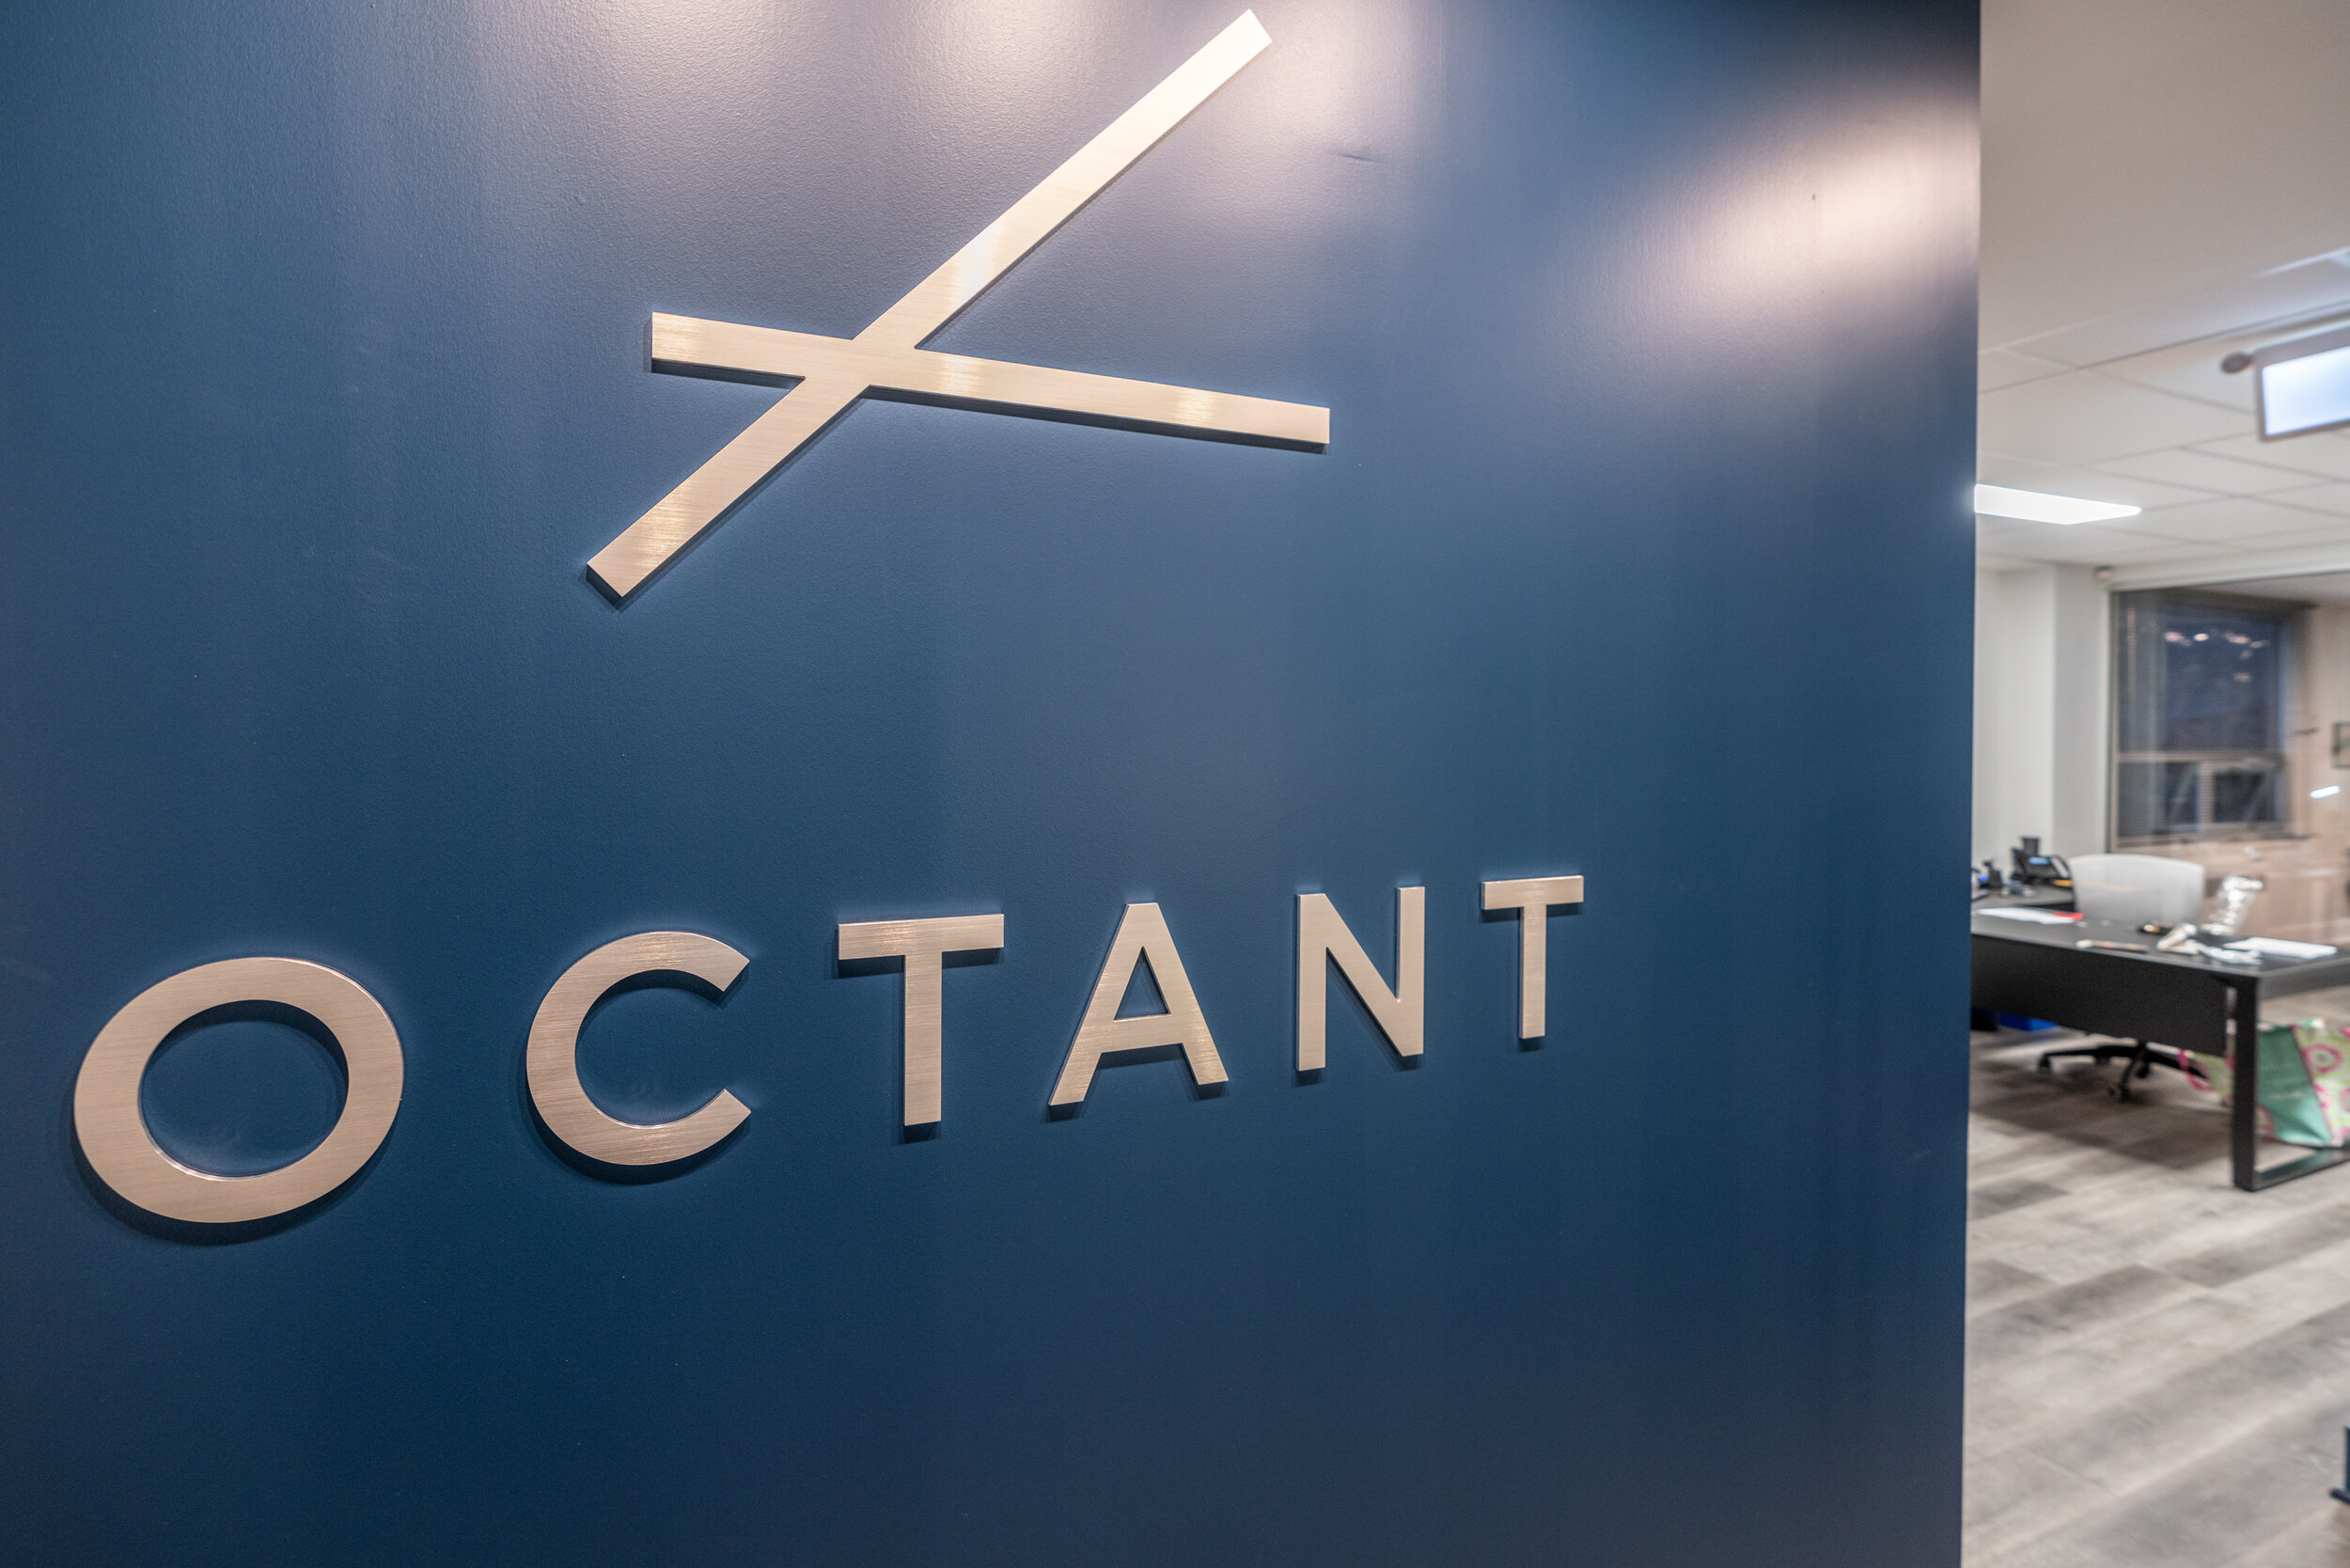 Octant | Inauguration House of aviation